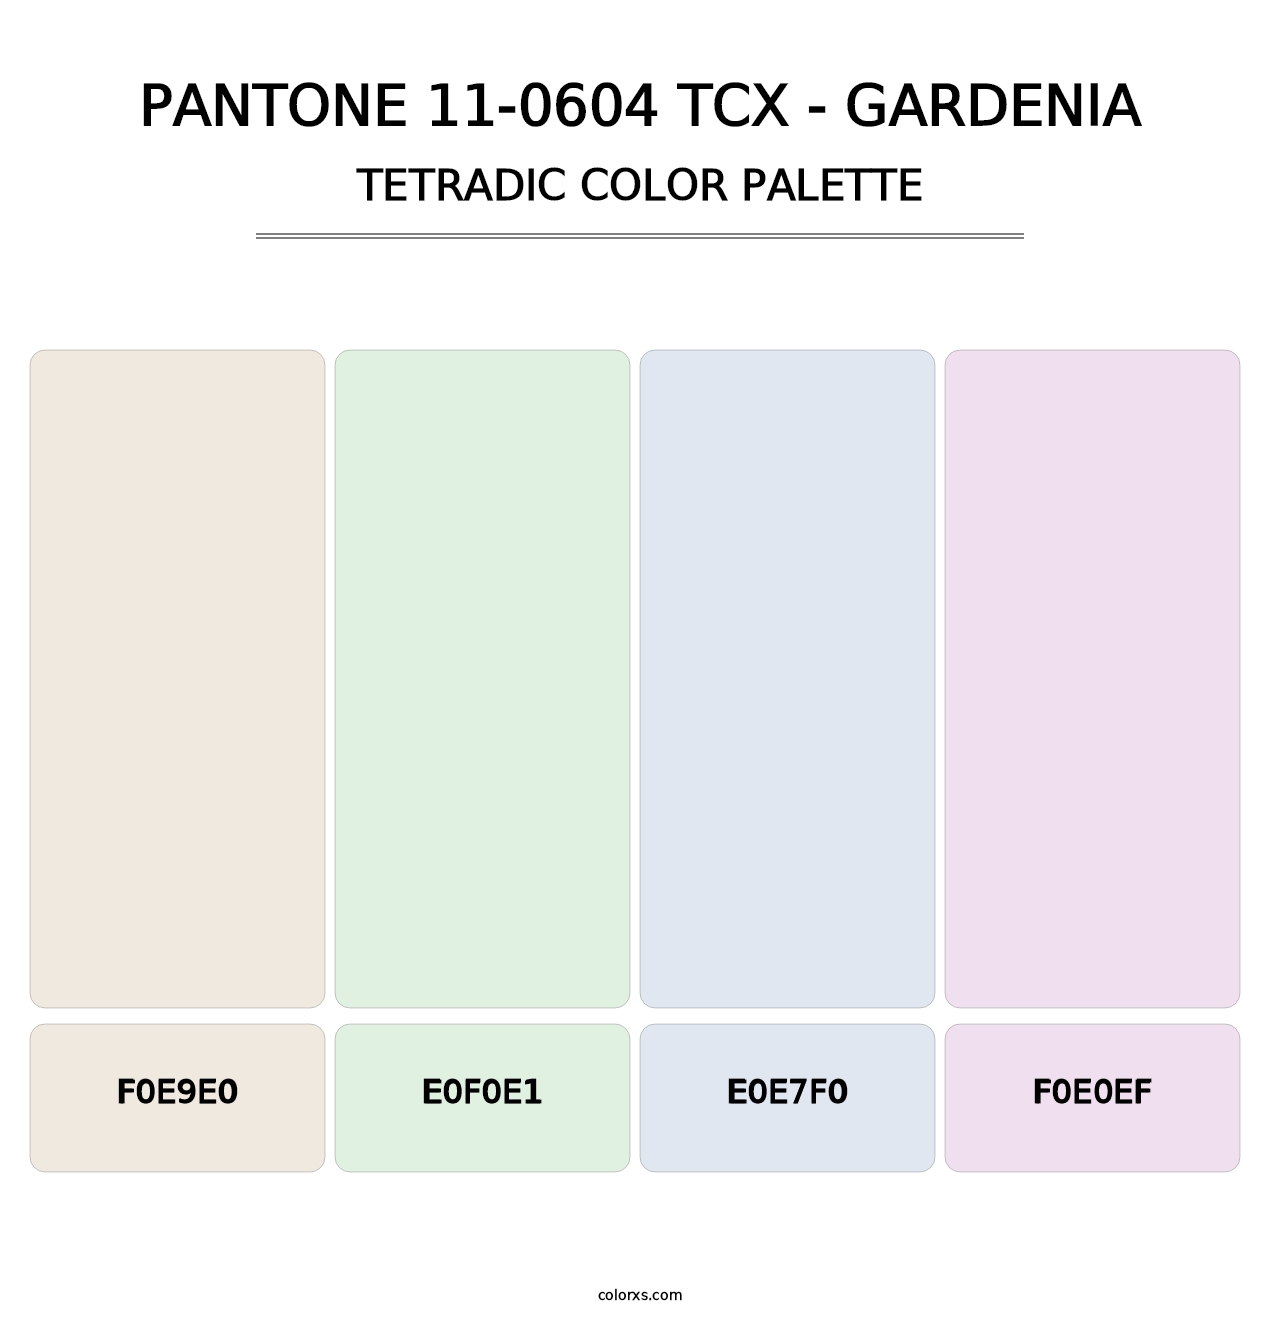 PANTONE 11-0604 TCX - Gardenia - Tetradic Color Palette